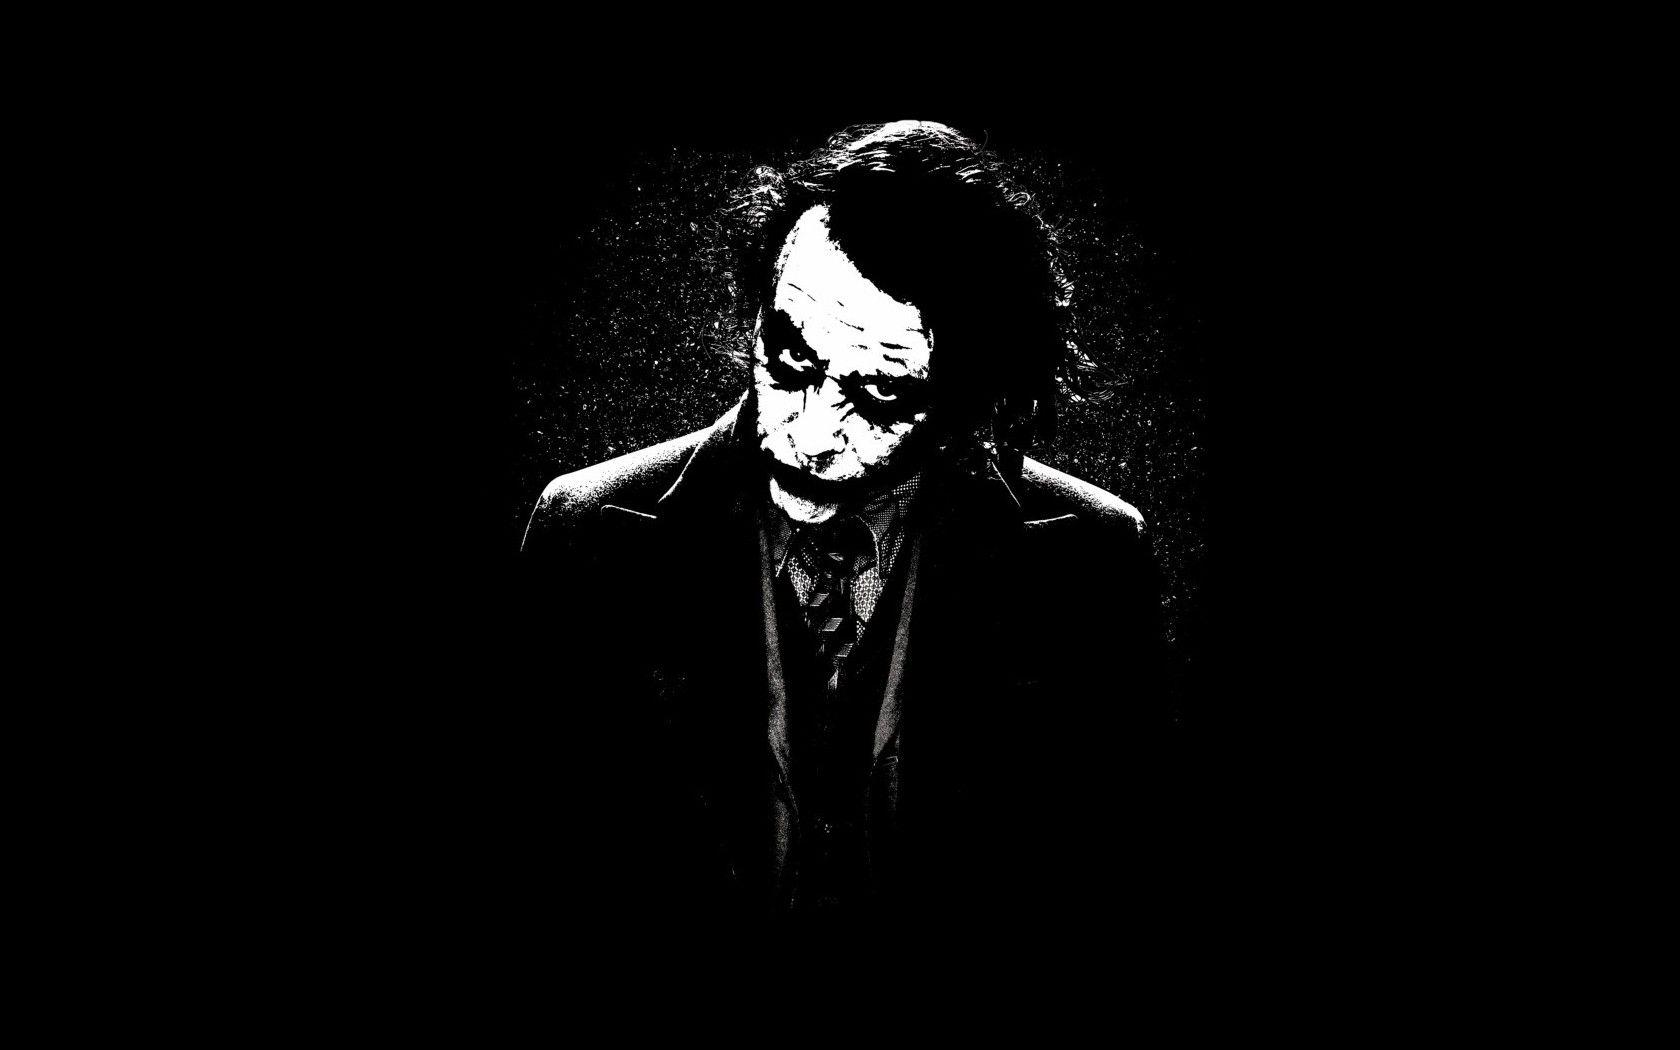 Joker mask Wallpapers Download  MobCup